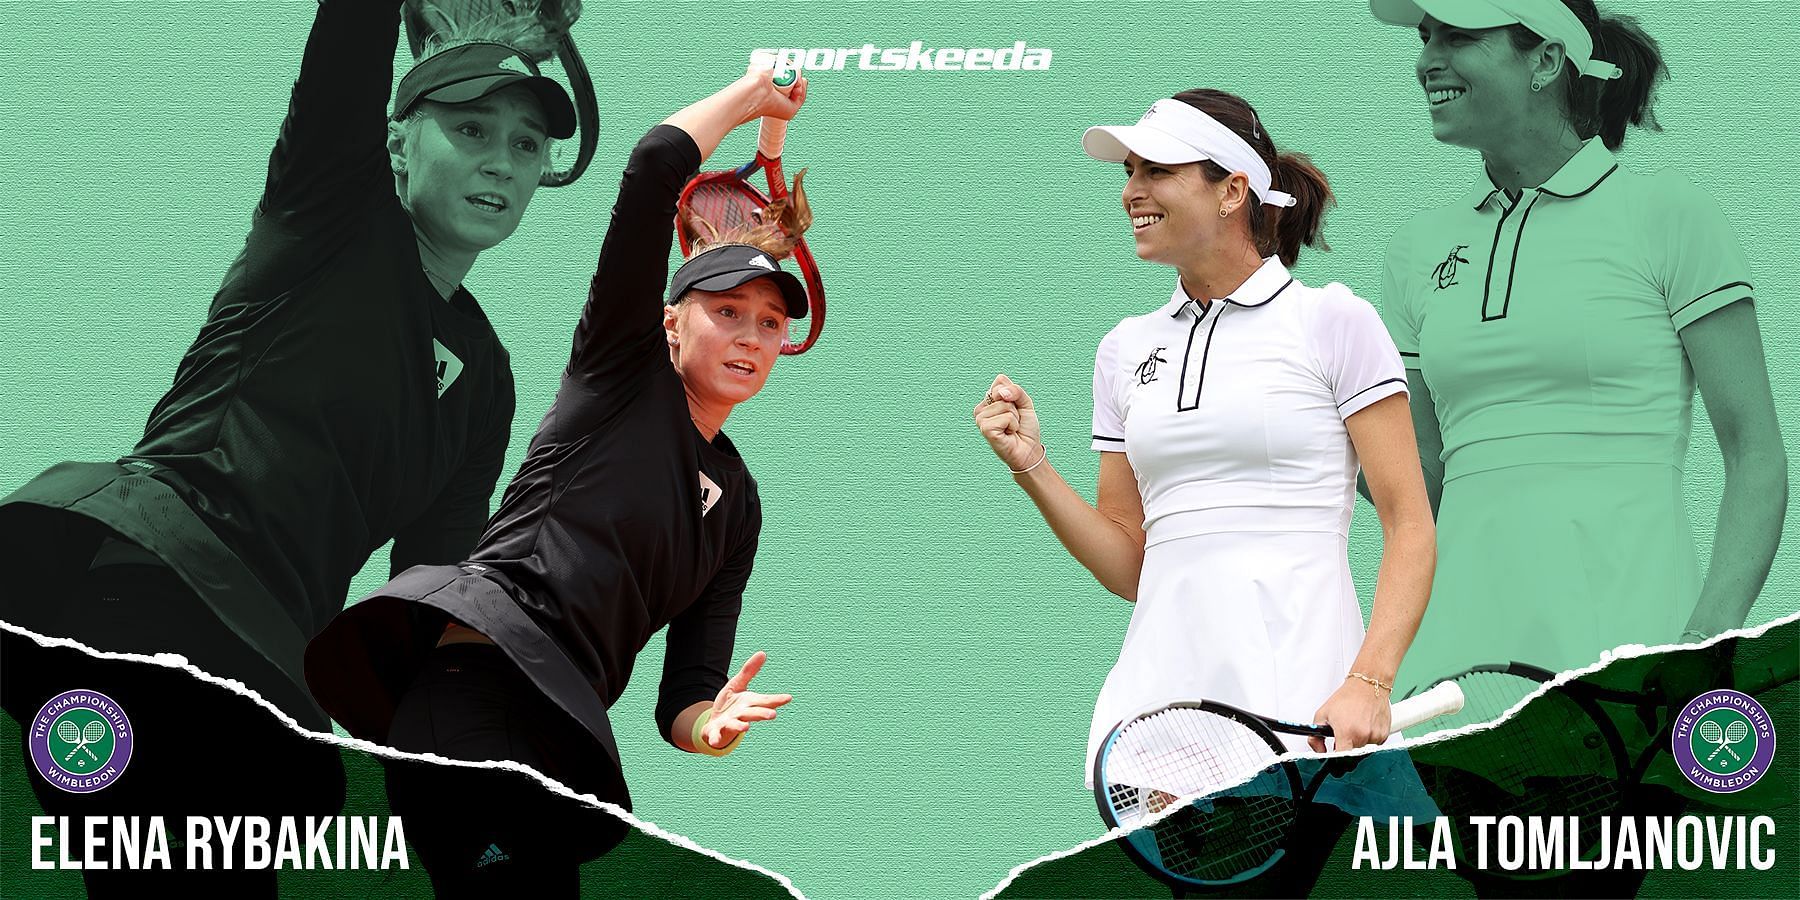 Elena Rybakina takes on Ajla Tomljanovic in the quarterfinals of Wimbledon